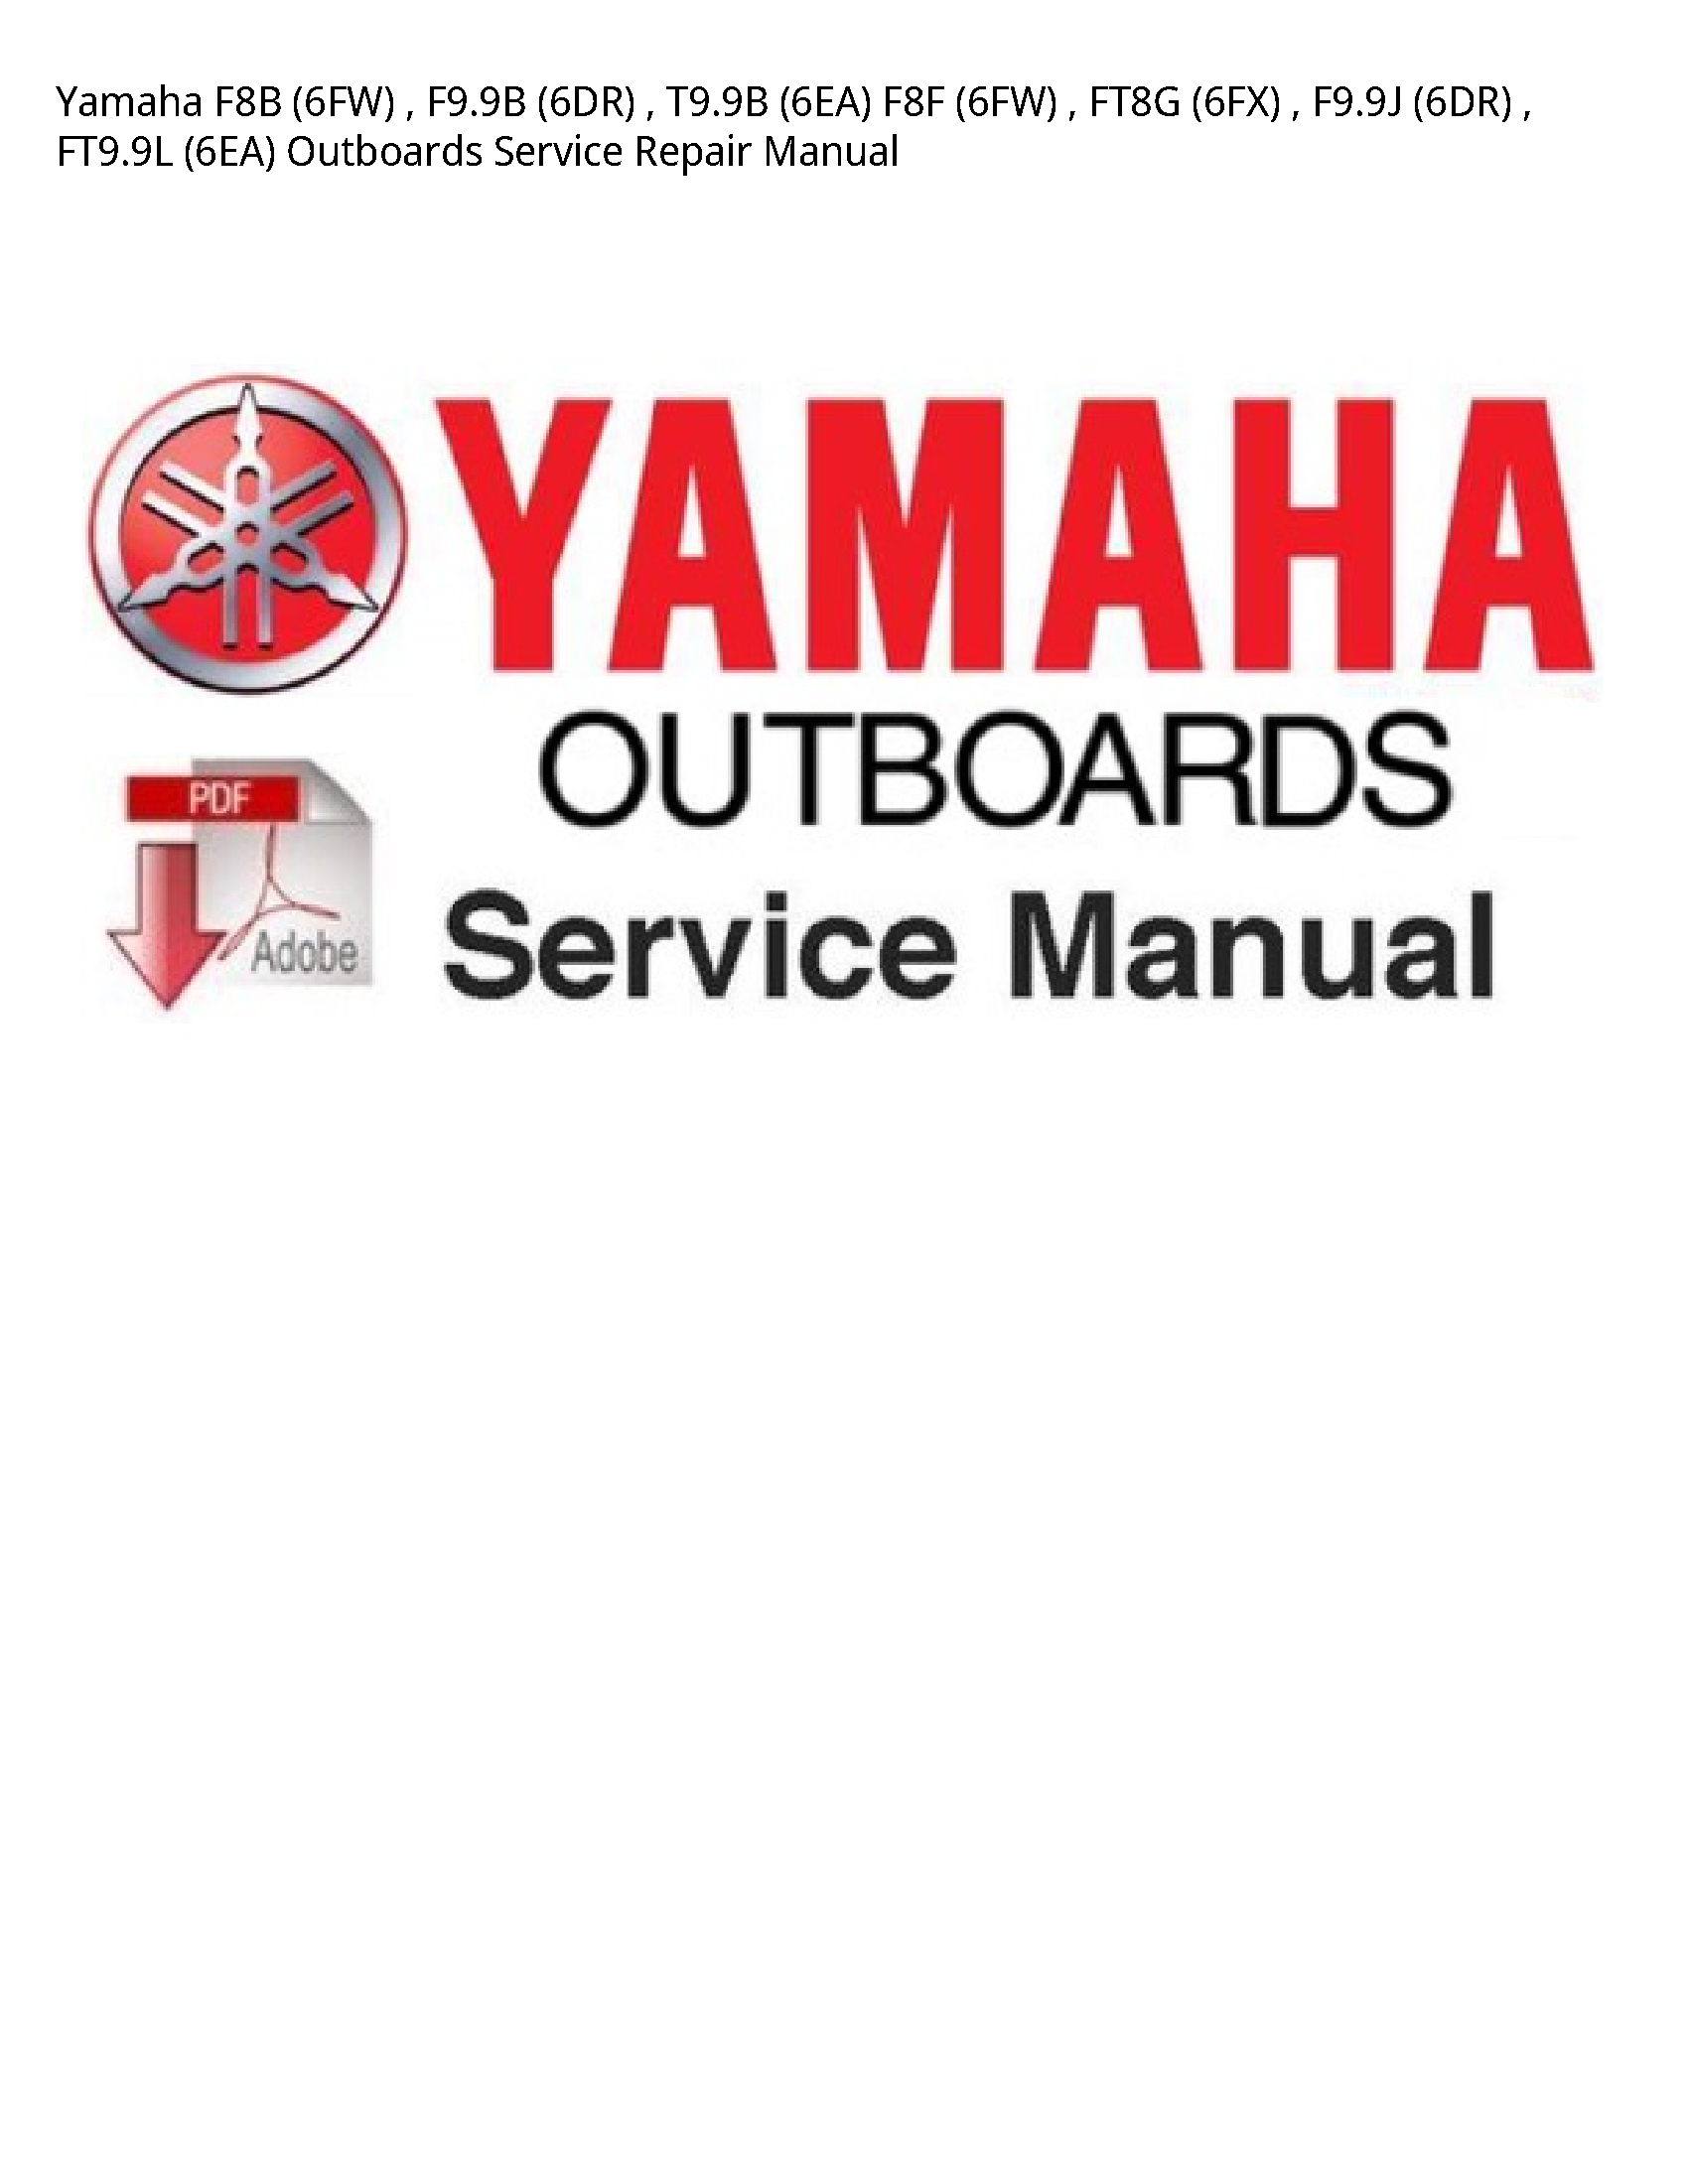 Yamaha F8B Outboards manual